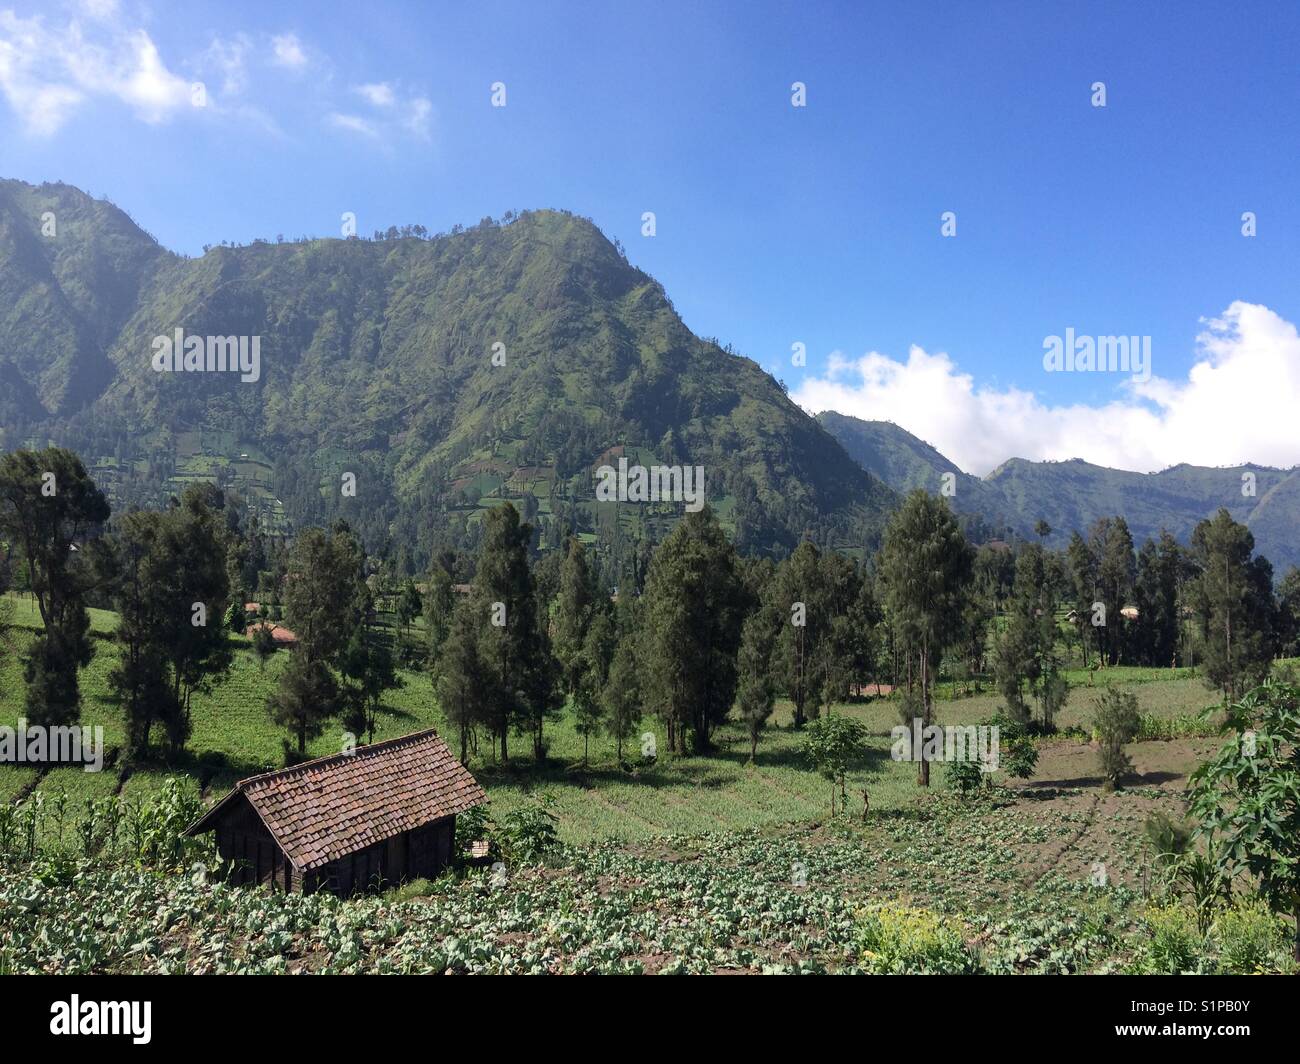 Scenery near Mount Bromo, Indonesia. Stock Photo